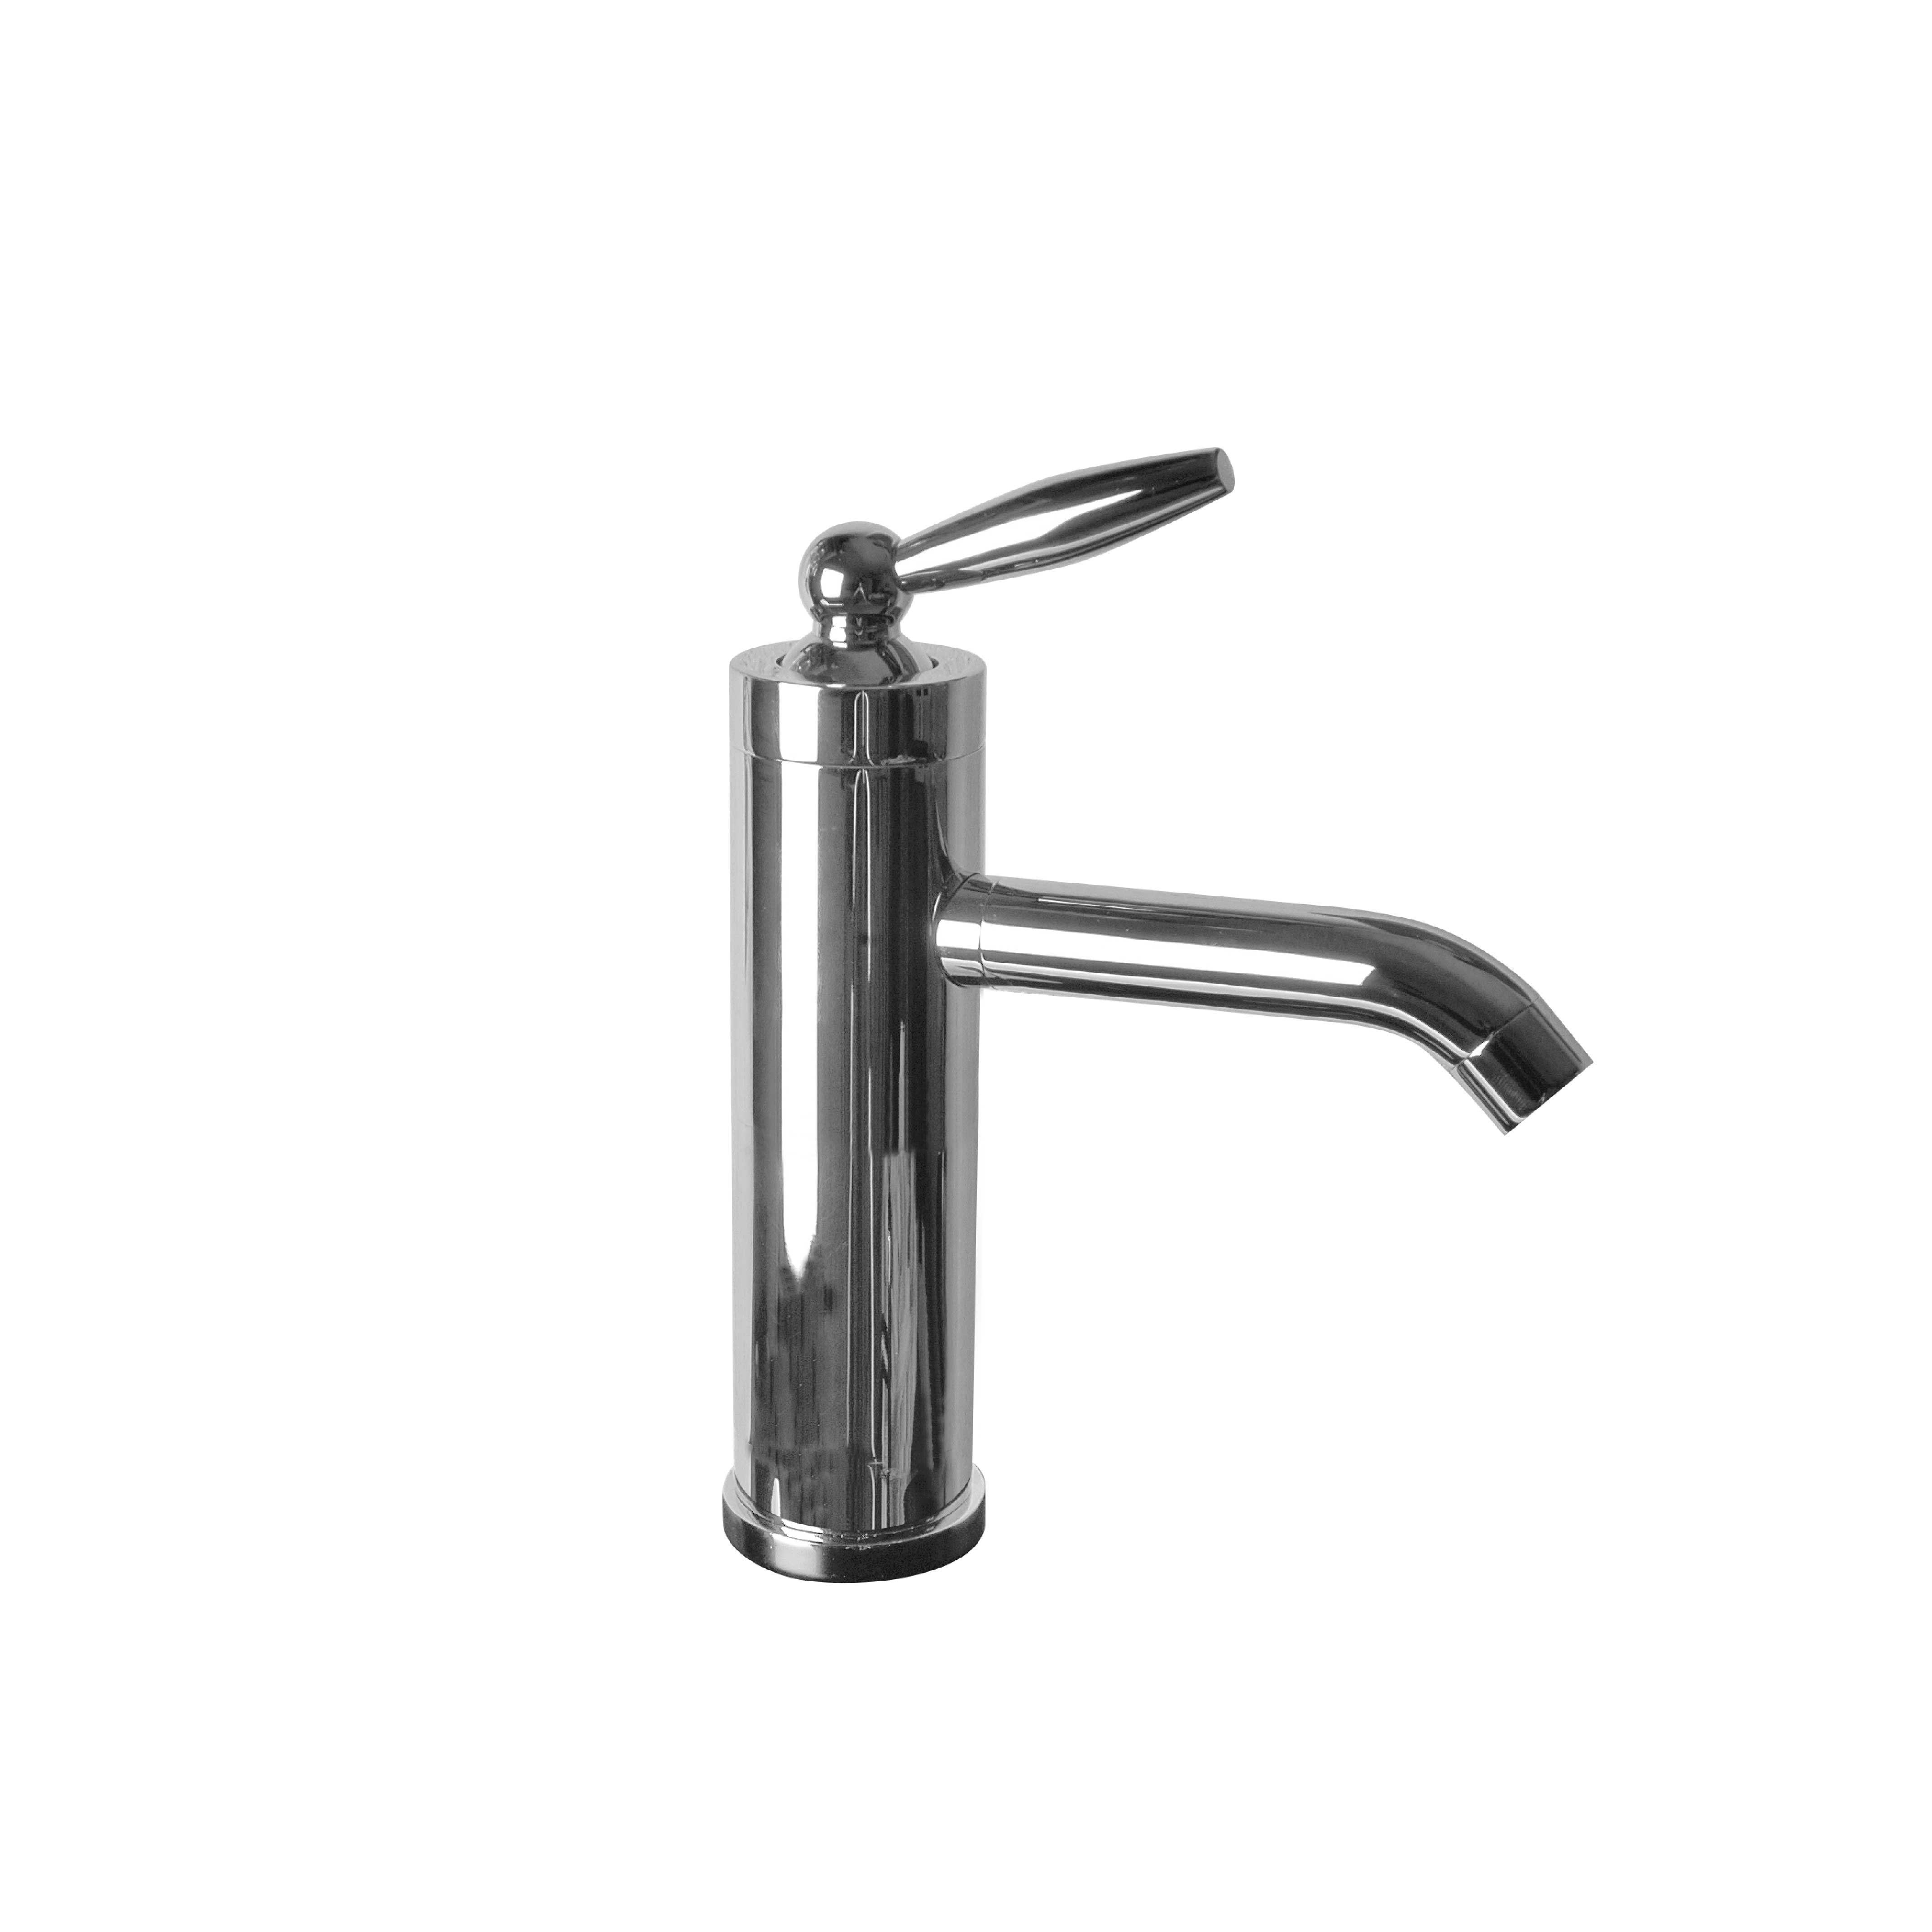 M50-4102M Single-hole wash-hand lever basin mixer